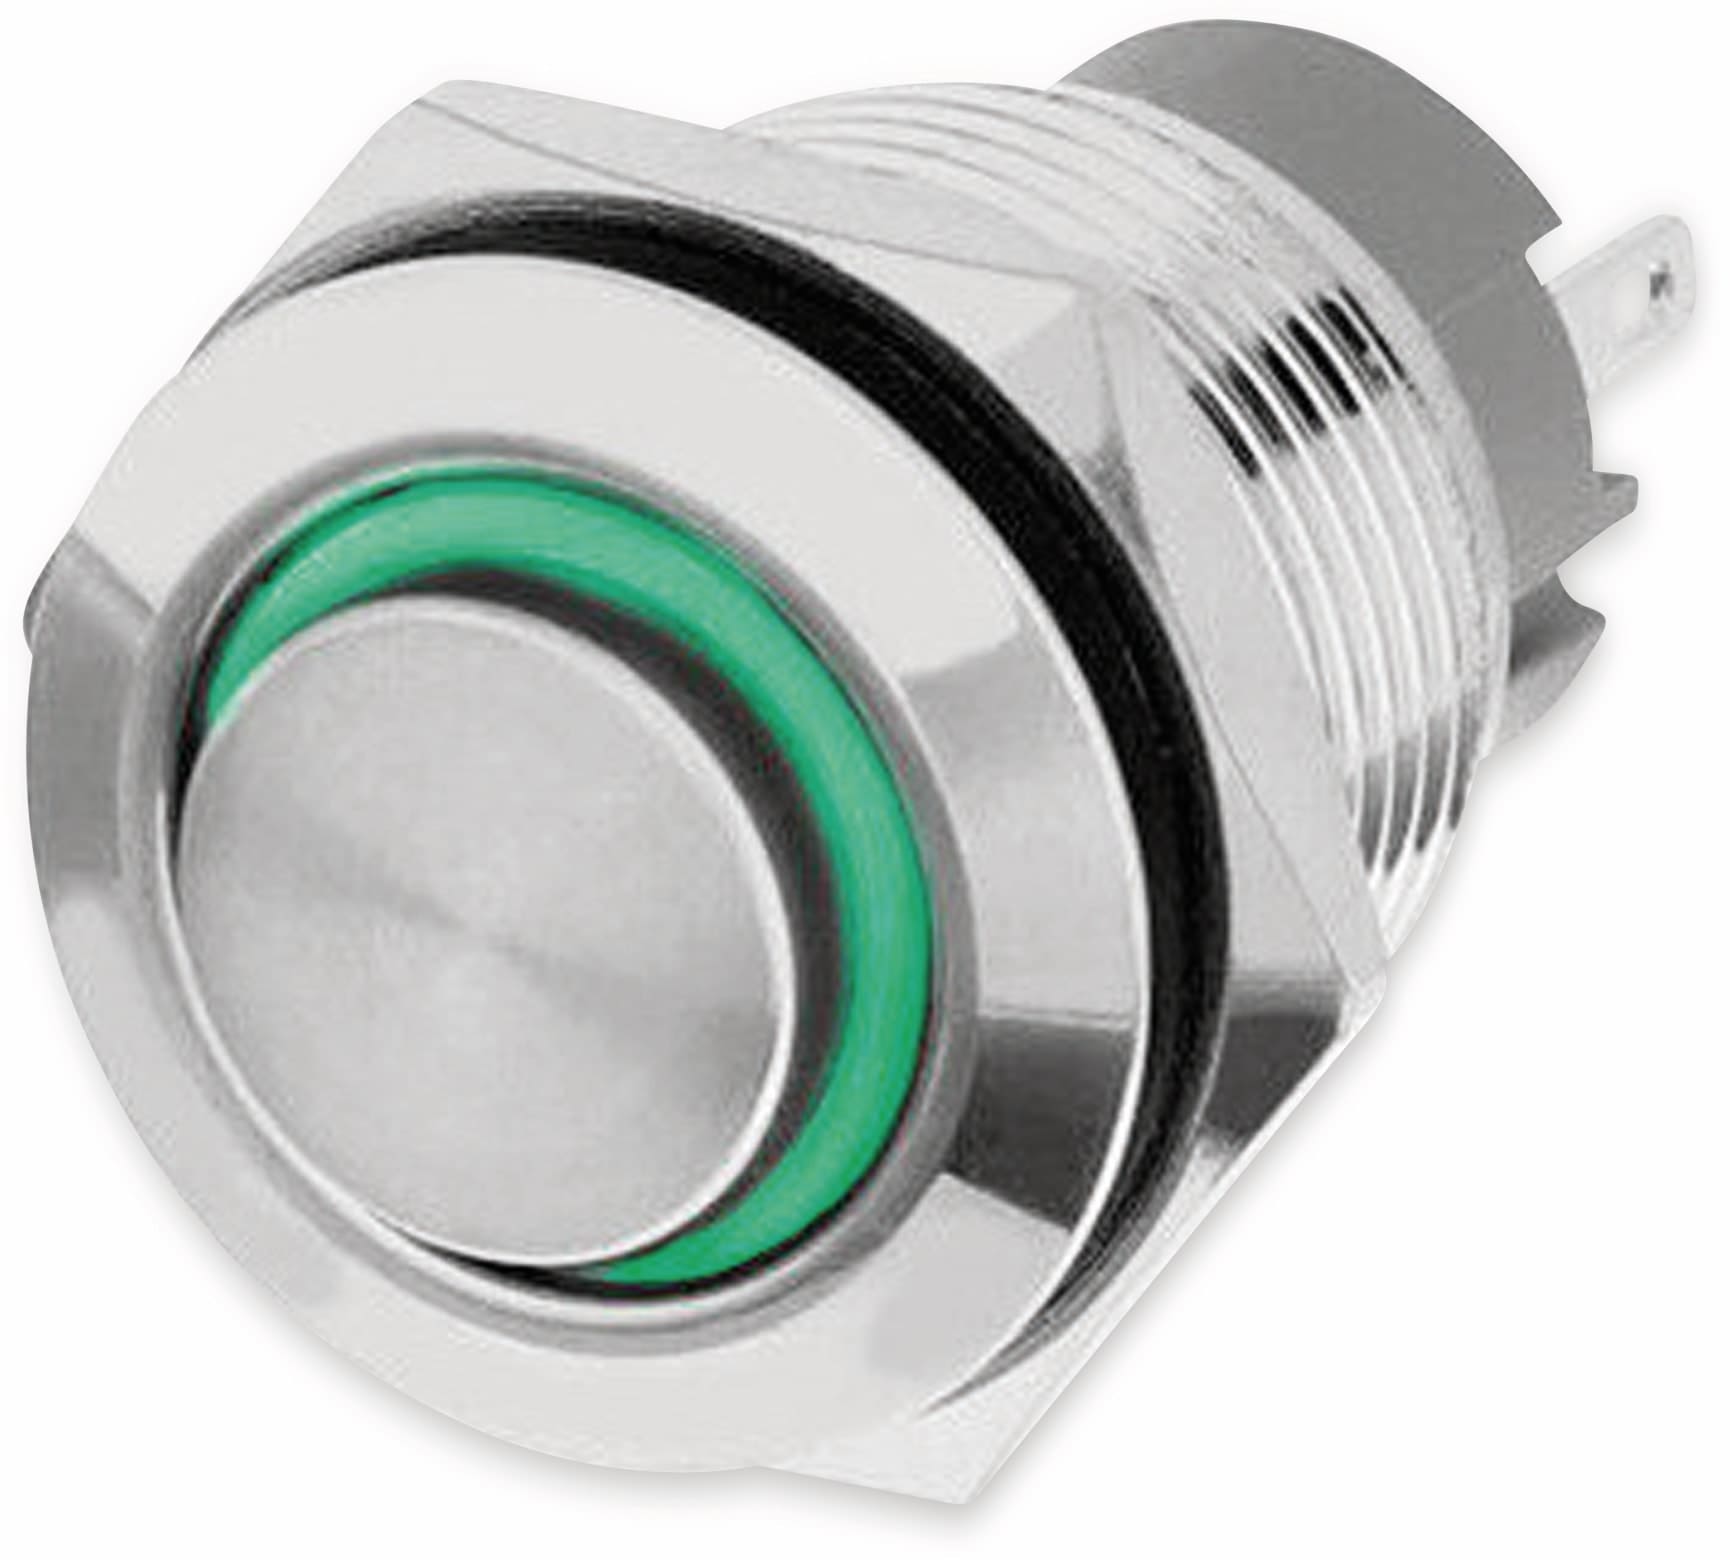 LED-Drucktaster, Ringbeleuchtung grün 12 V, Ø16 mm, 5 A/48 V